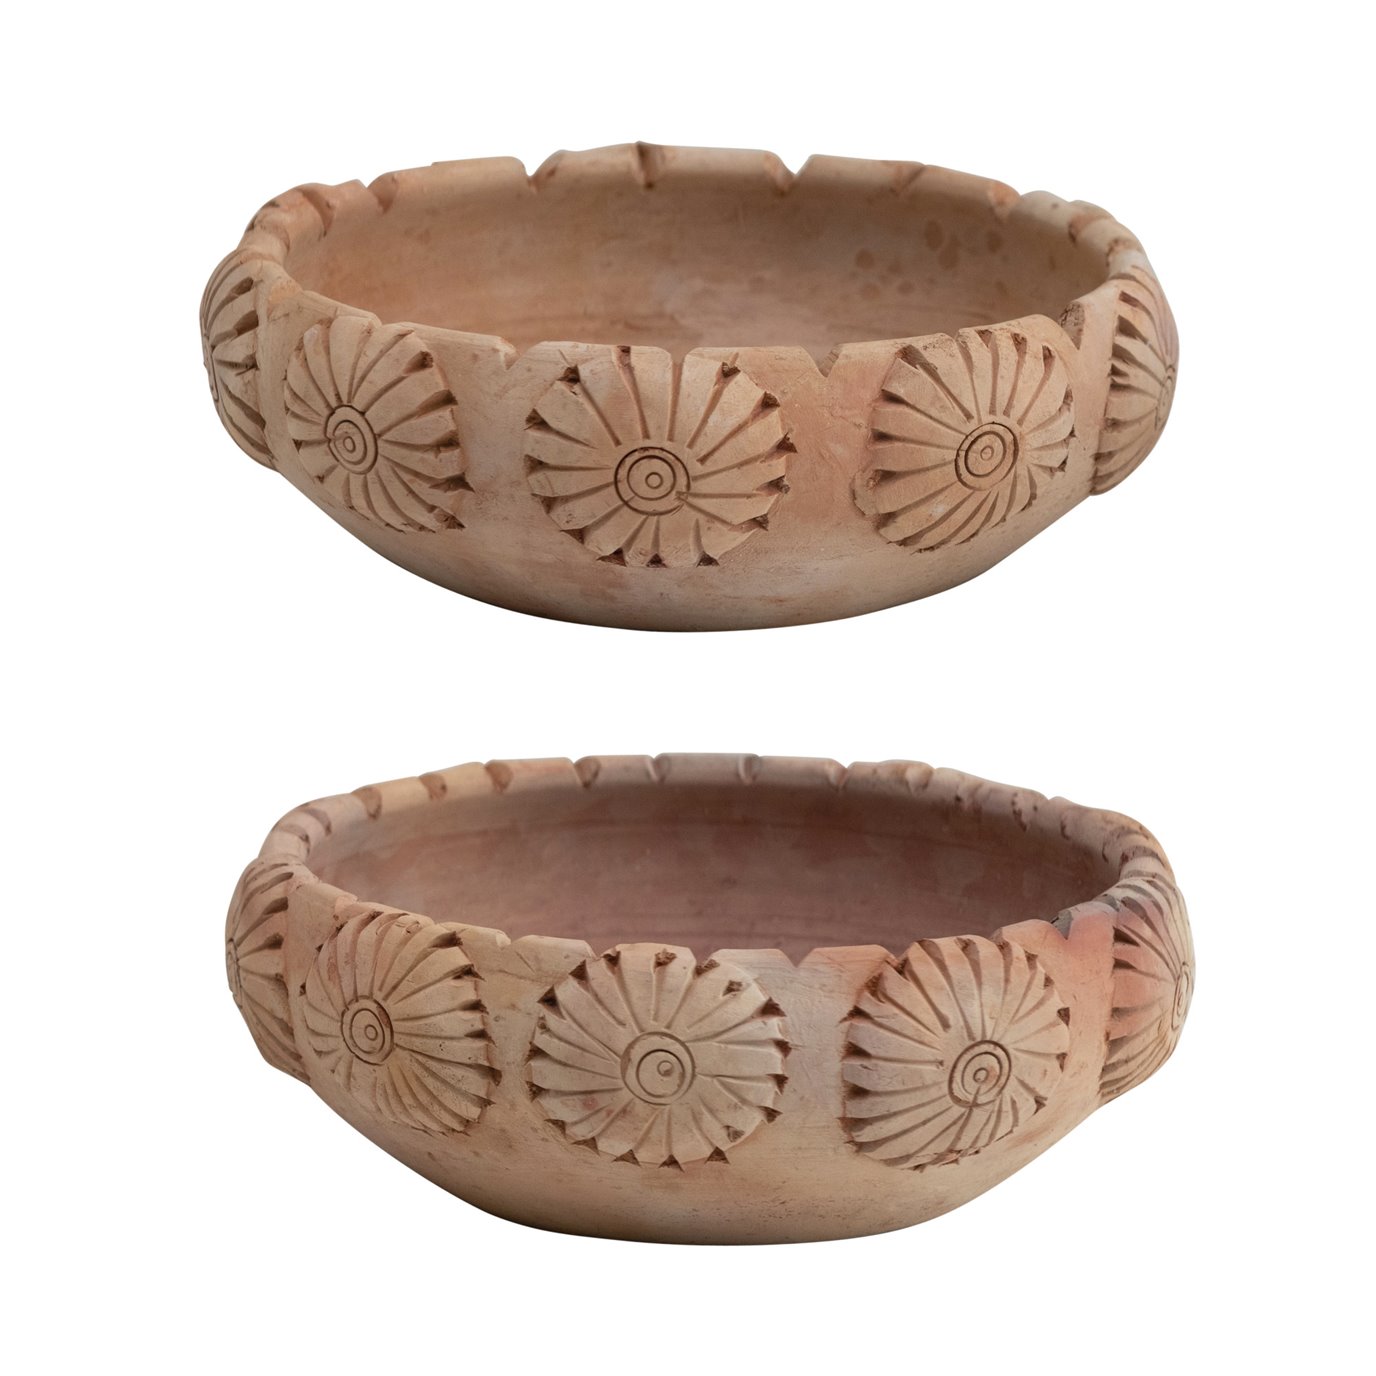 Handmade Decorative Engraved Terra-cotta Bowl